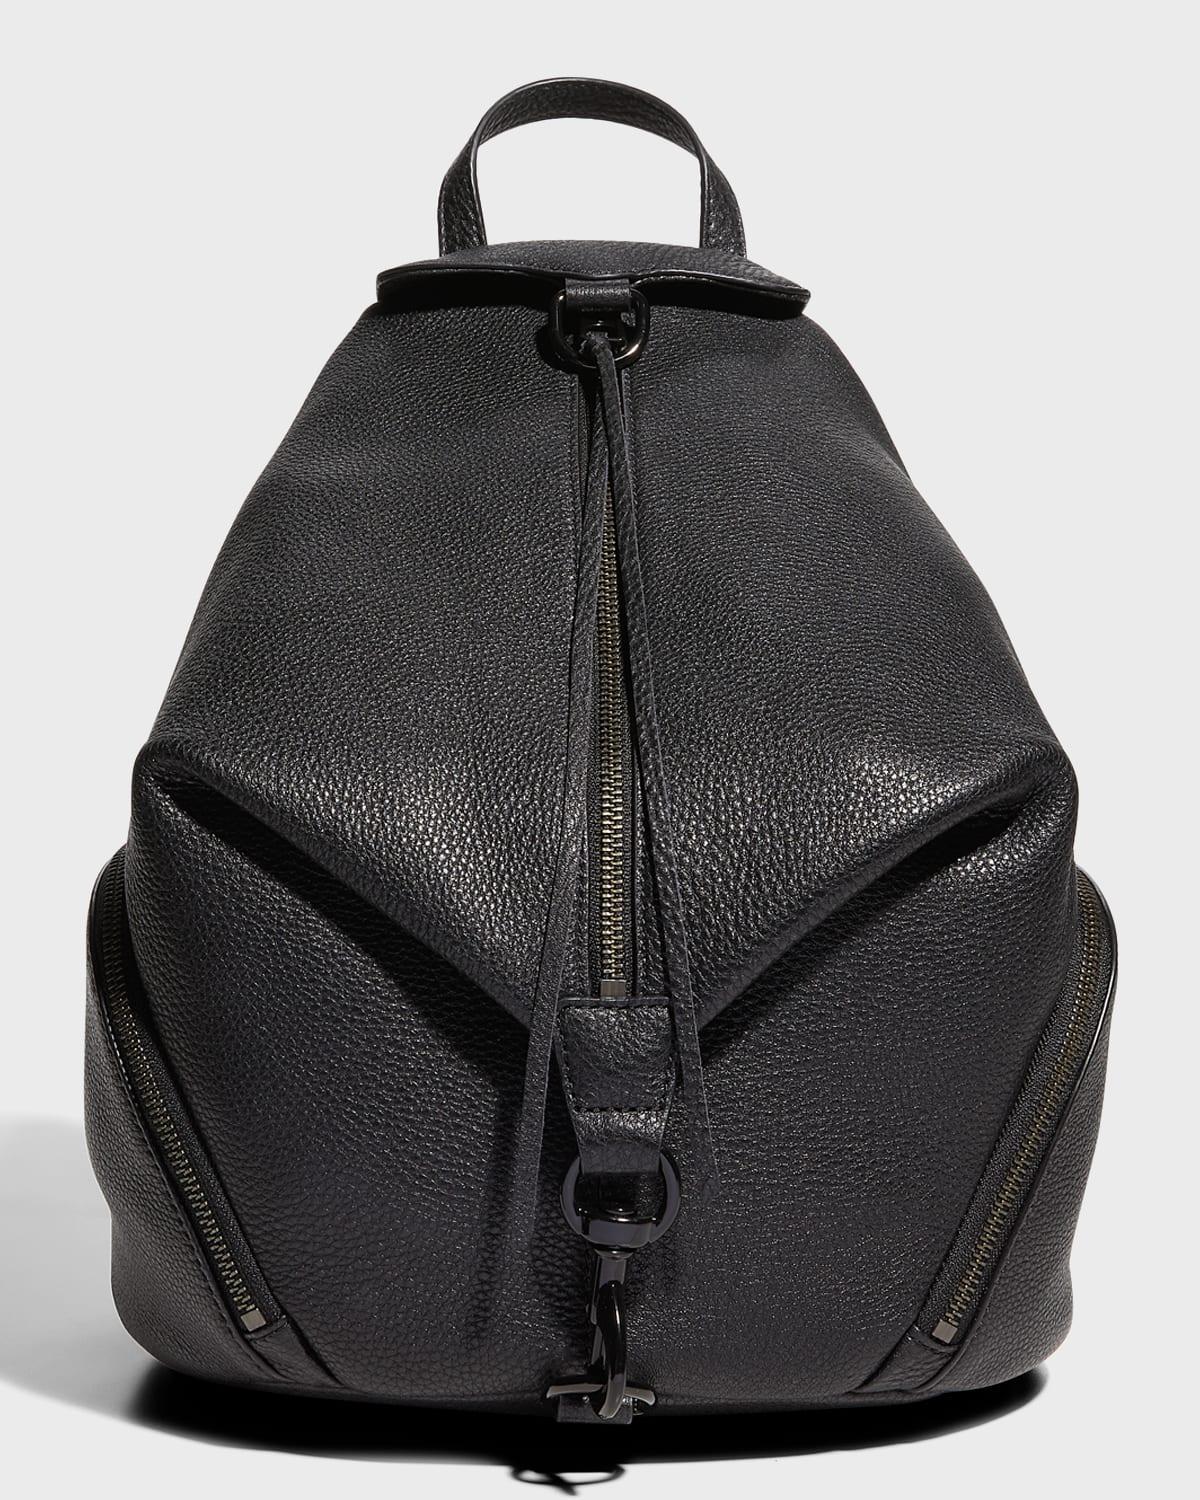 Rebecca Minkoff Julian Backpack (Black 9) Backpack Bags Product Image